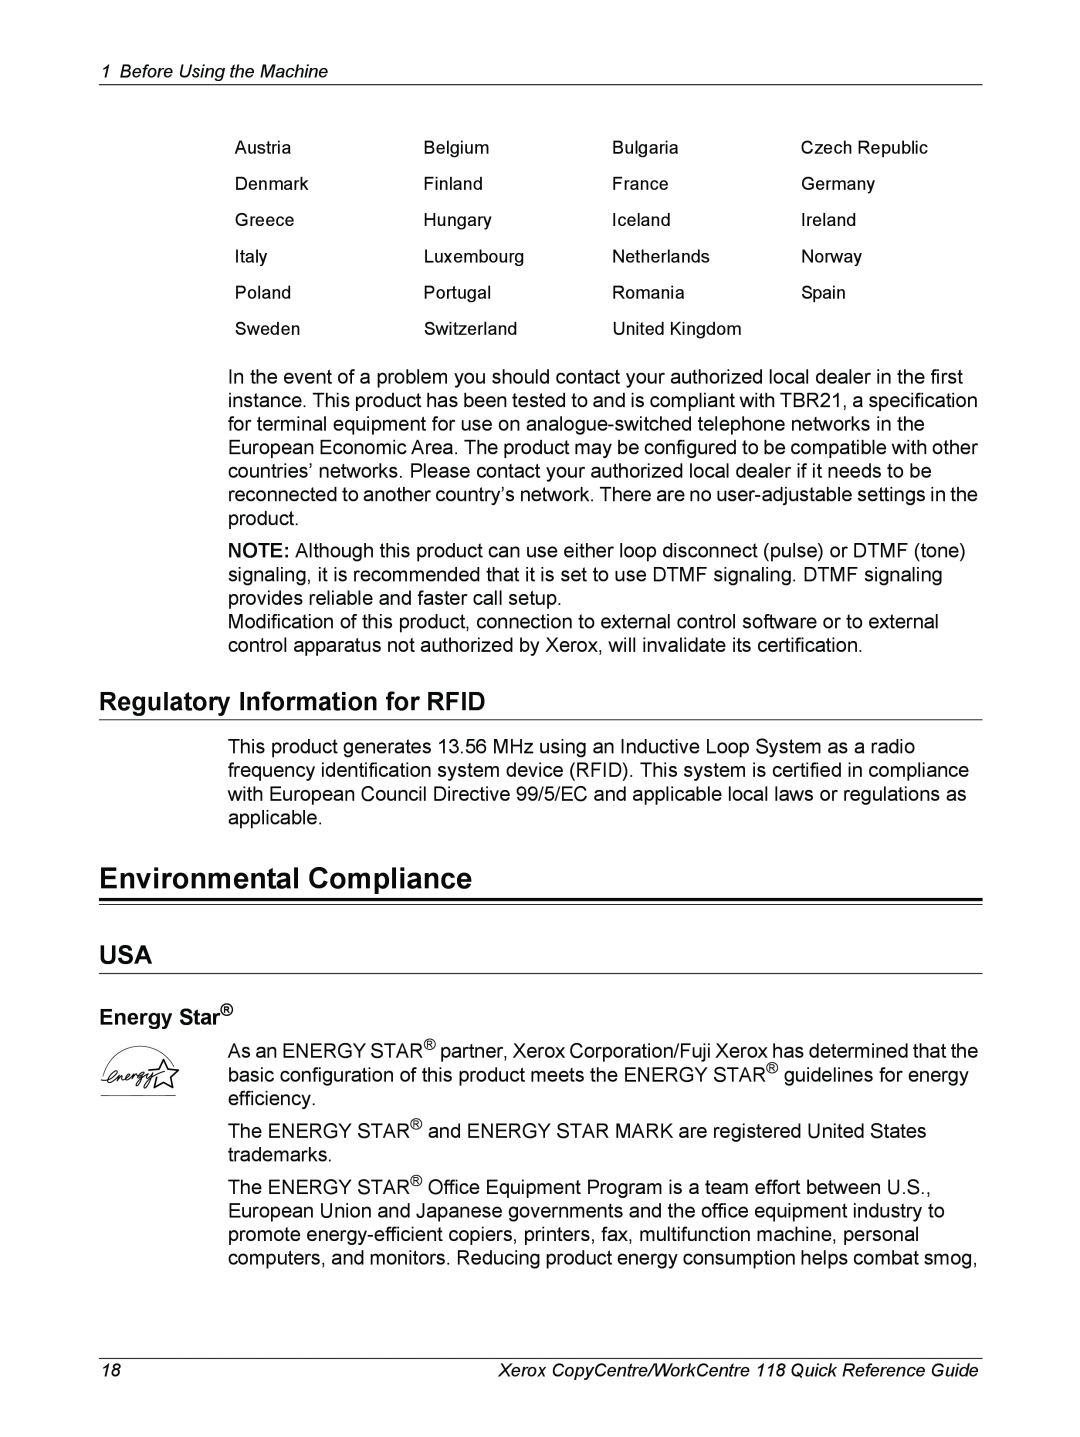 Xerox C118, M118i manual Environmental Compliance, Regulatory Information for RFID, Energy Star 